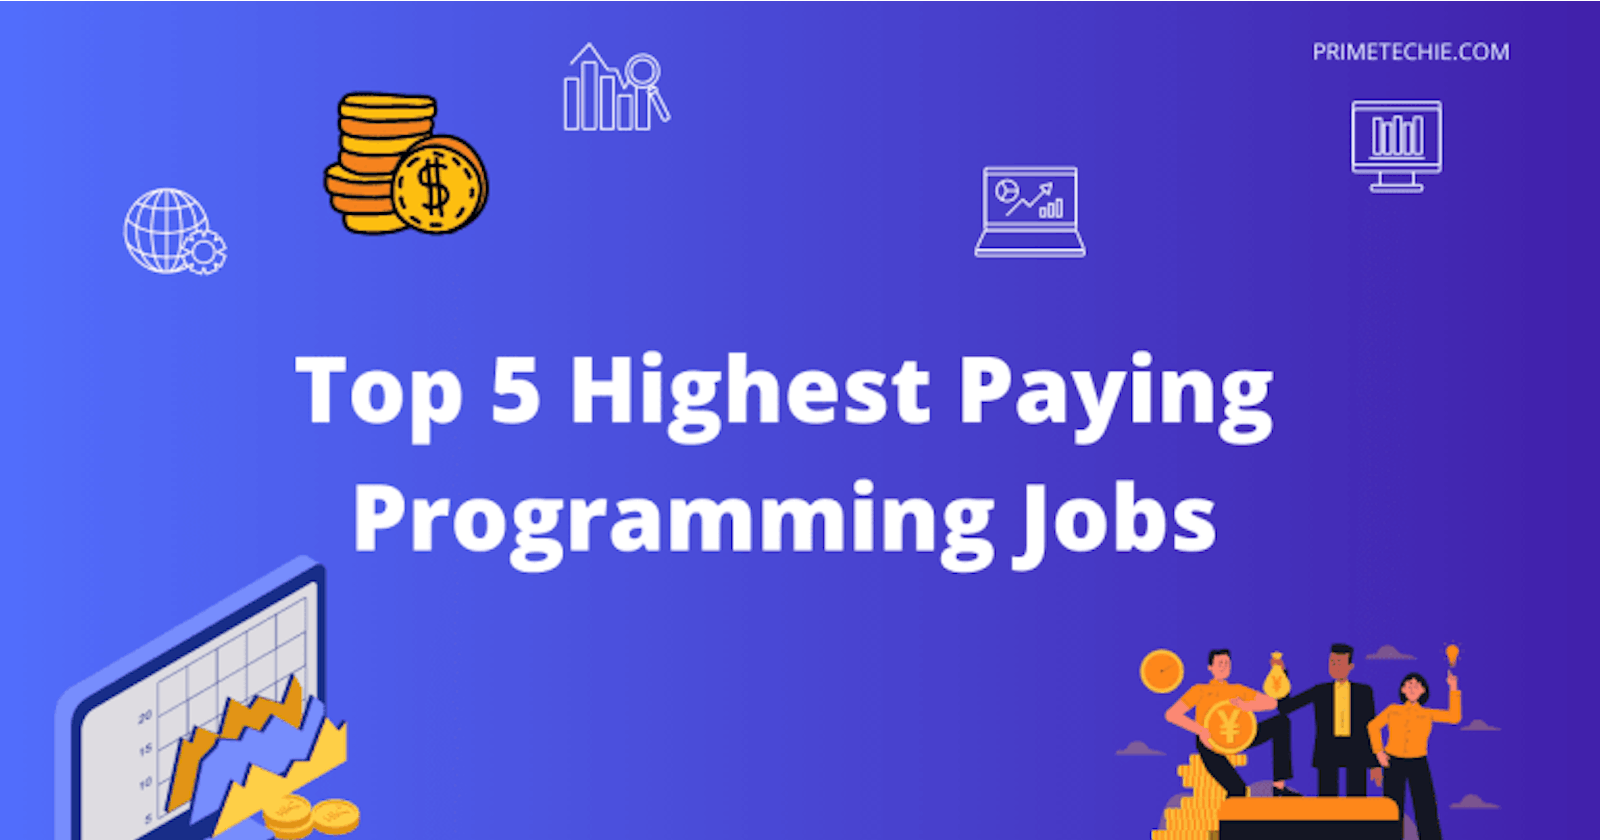 Top 5 Highest Paying Programming Jobs